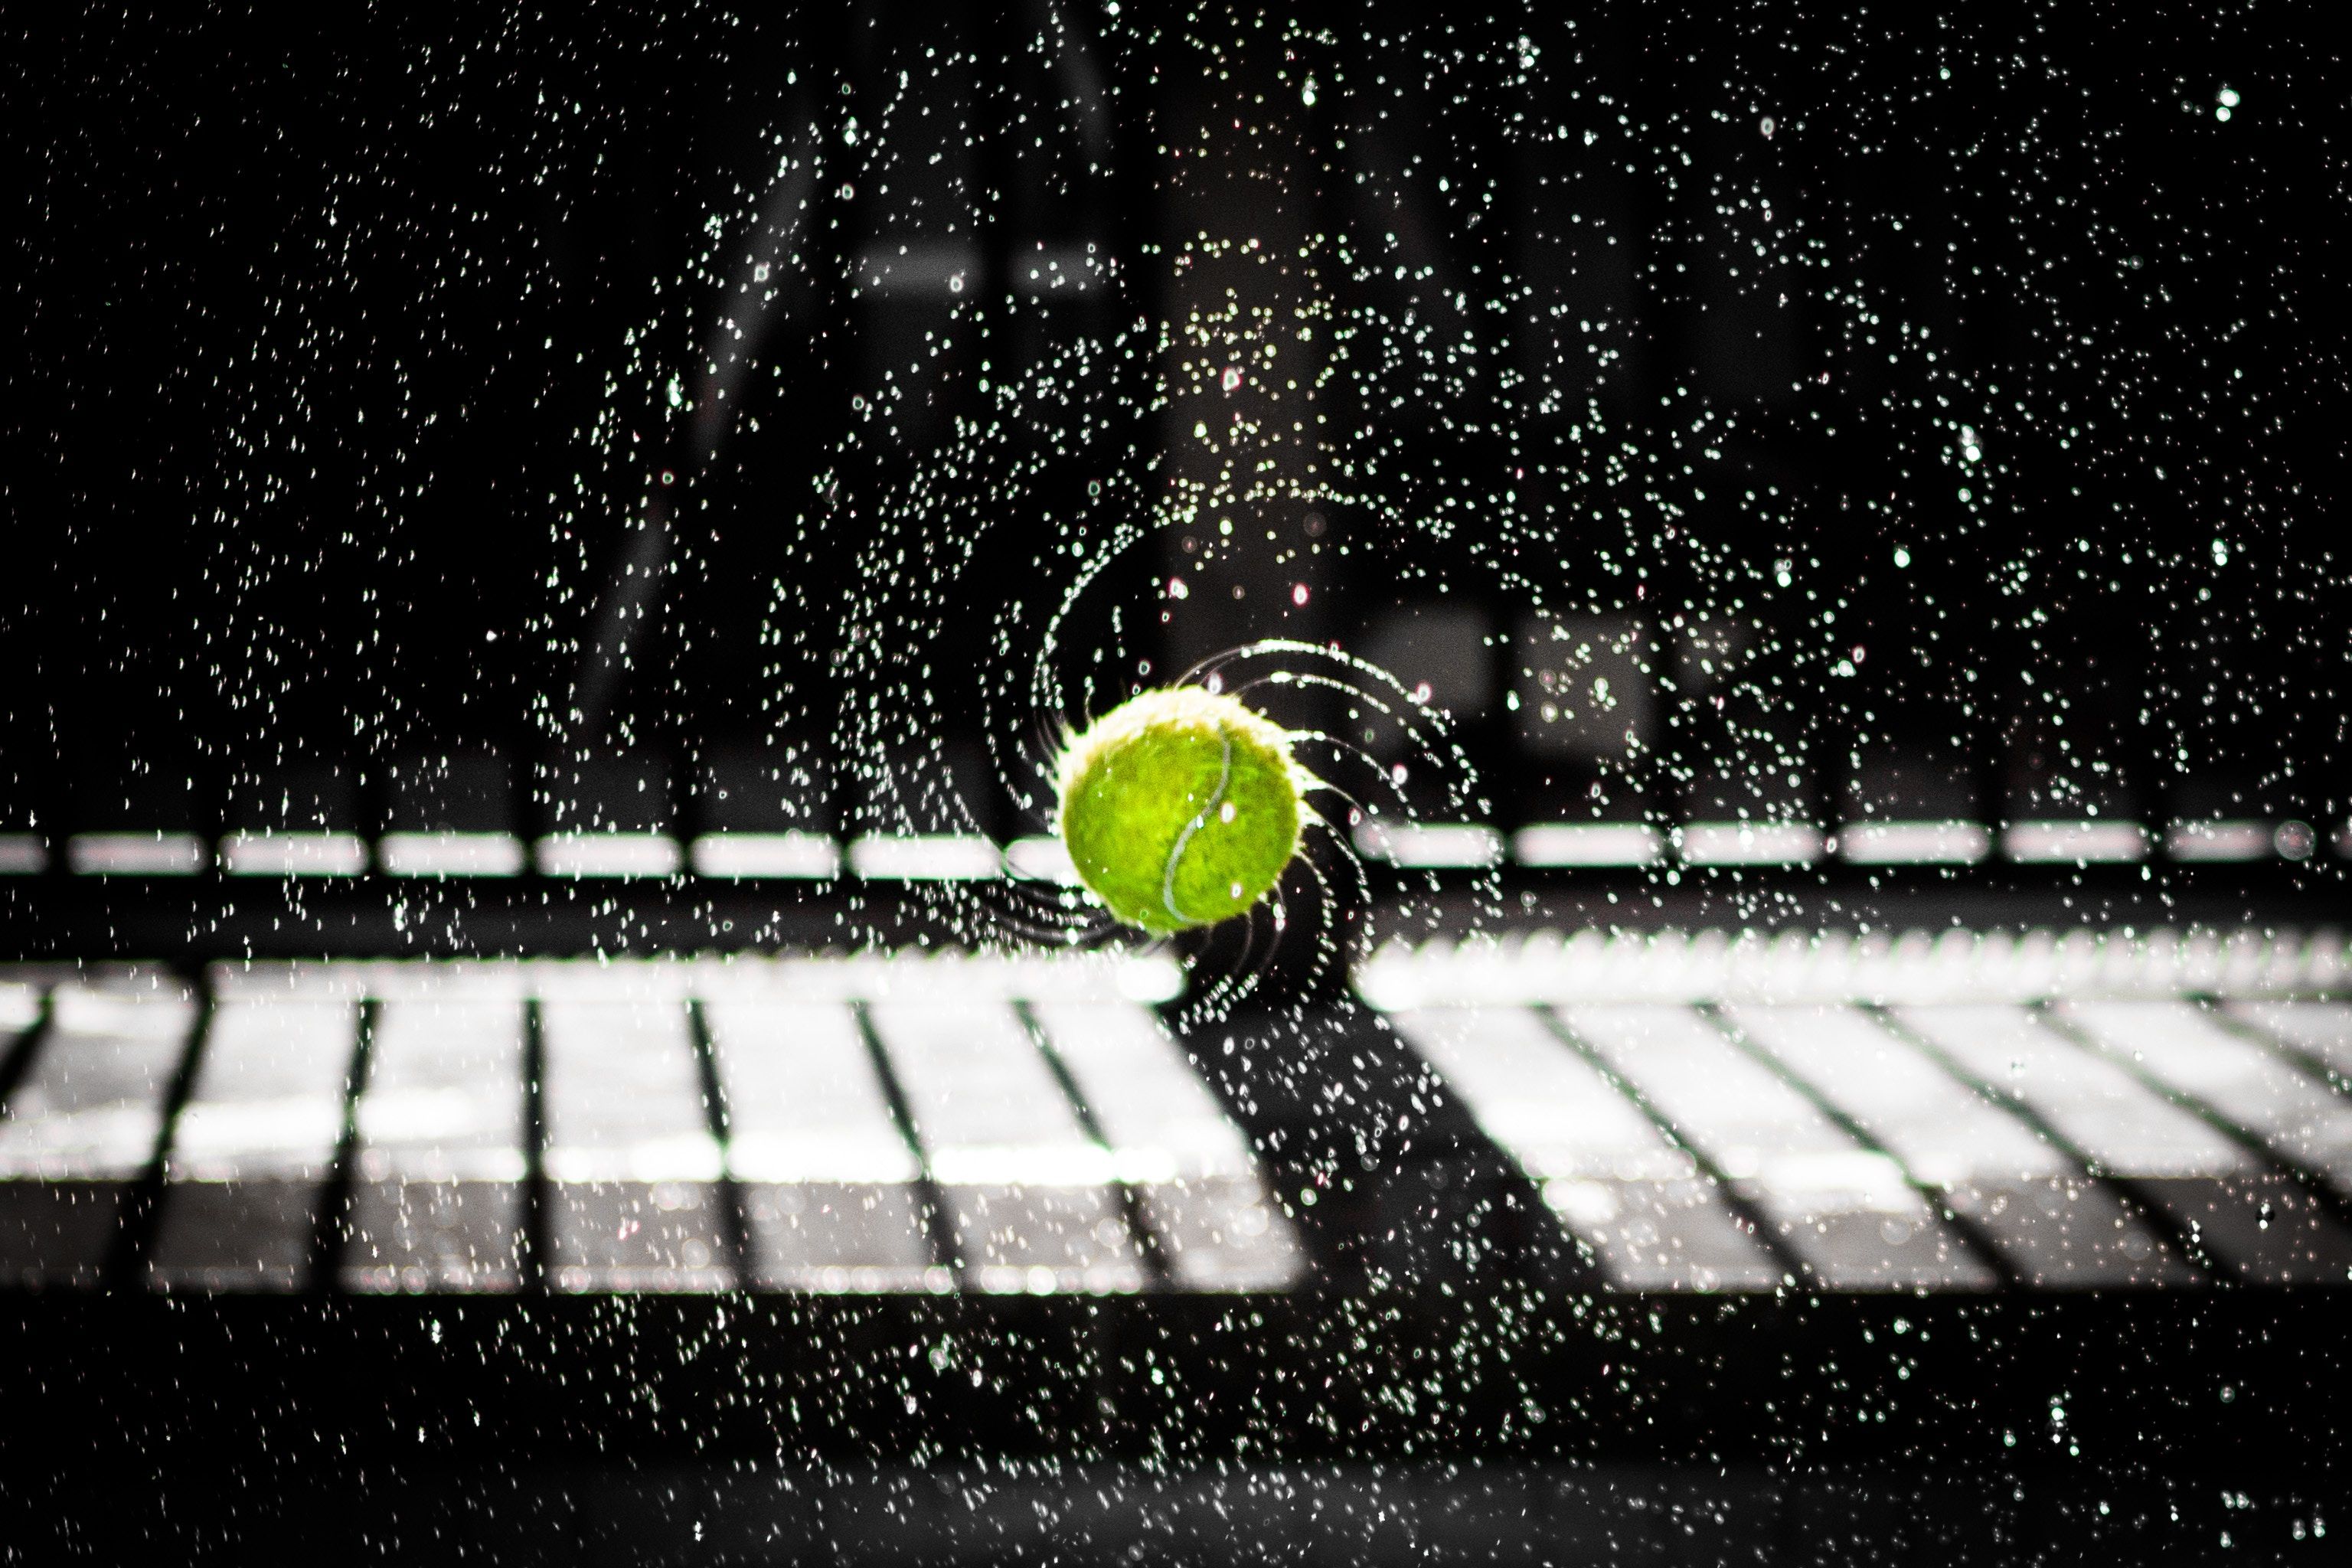  Tennis Hintergrundbild 3072x2048. 3072x2048 tennis ball, fast, victorium, sports background, australia, exploring, speed, tenni, spiral, fun, curl, playing, spin, christmas, sports wallpaper, ball, wallpaper, Public domain image, spray, water, fling.me!